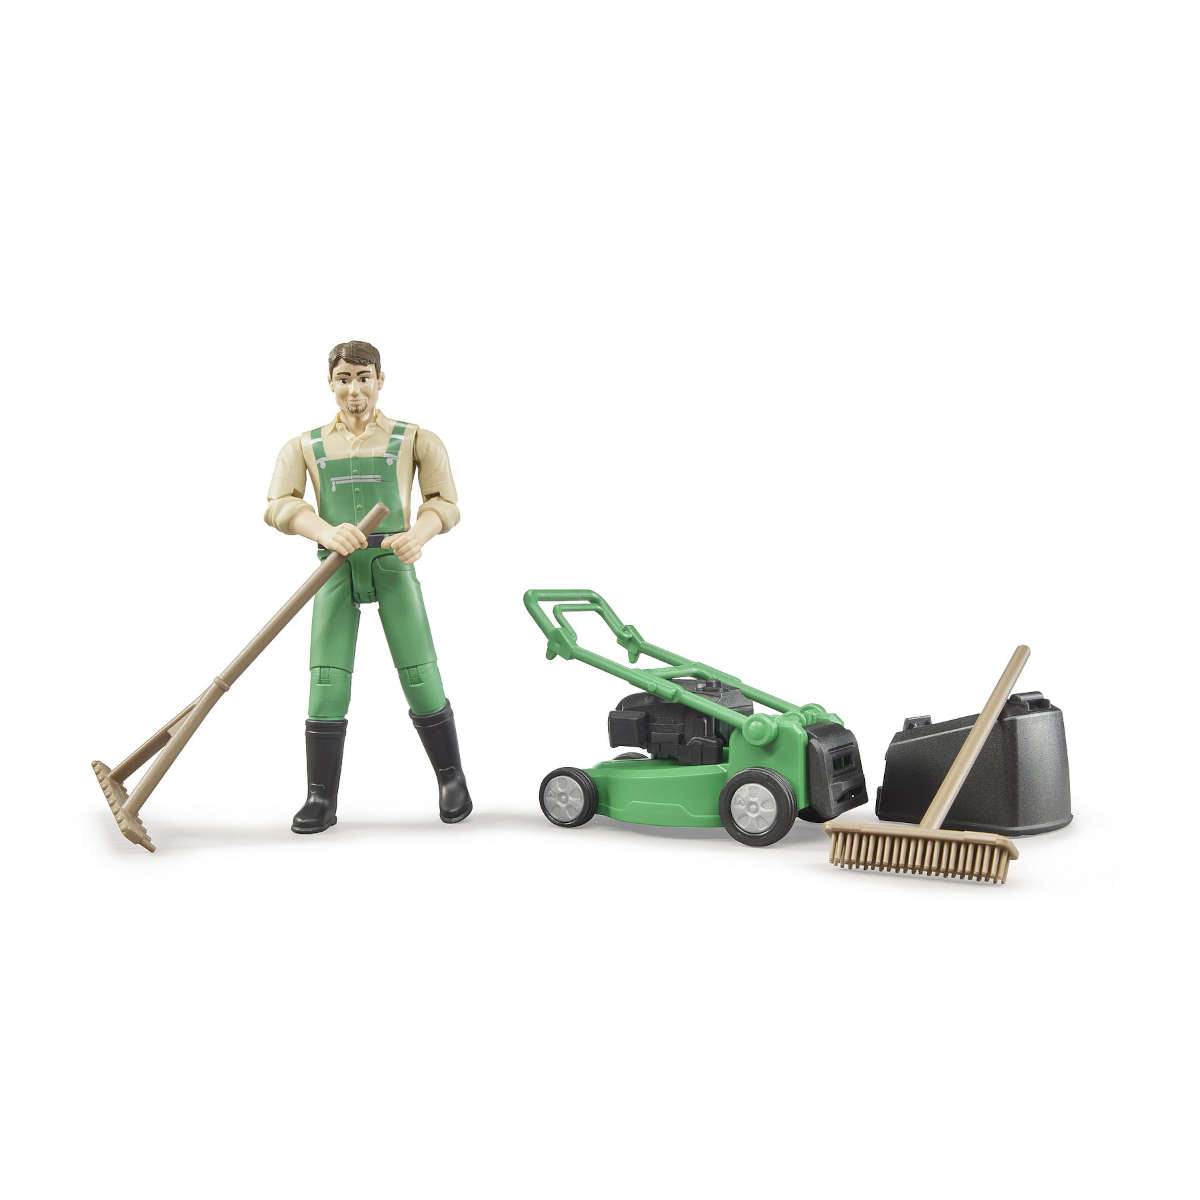 Bruder BWorld Gardener with Lawnmower and Equipment